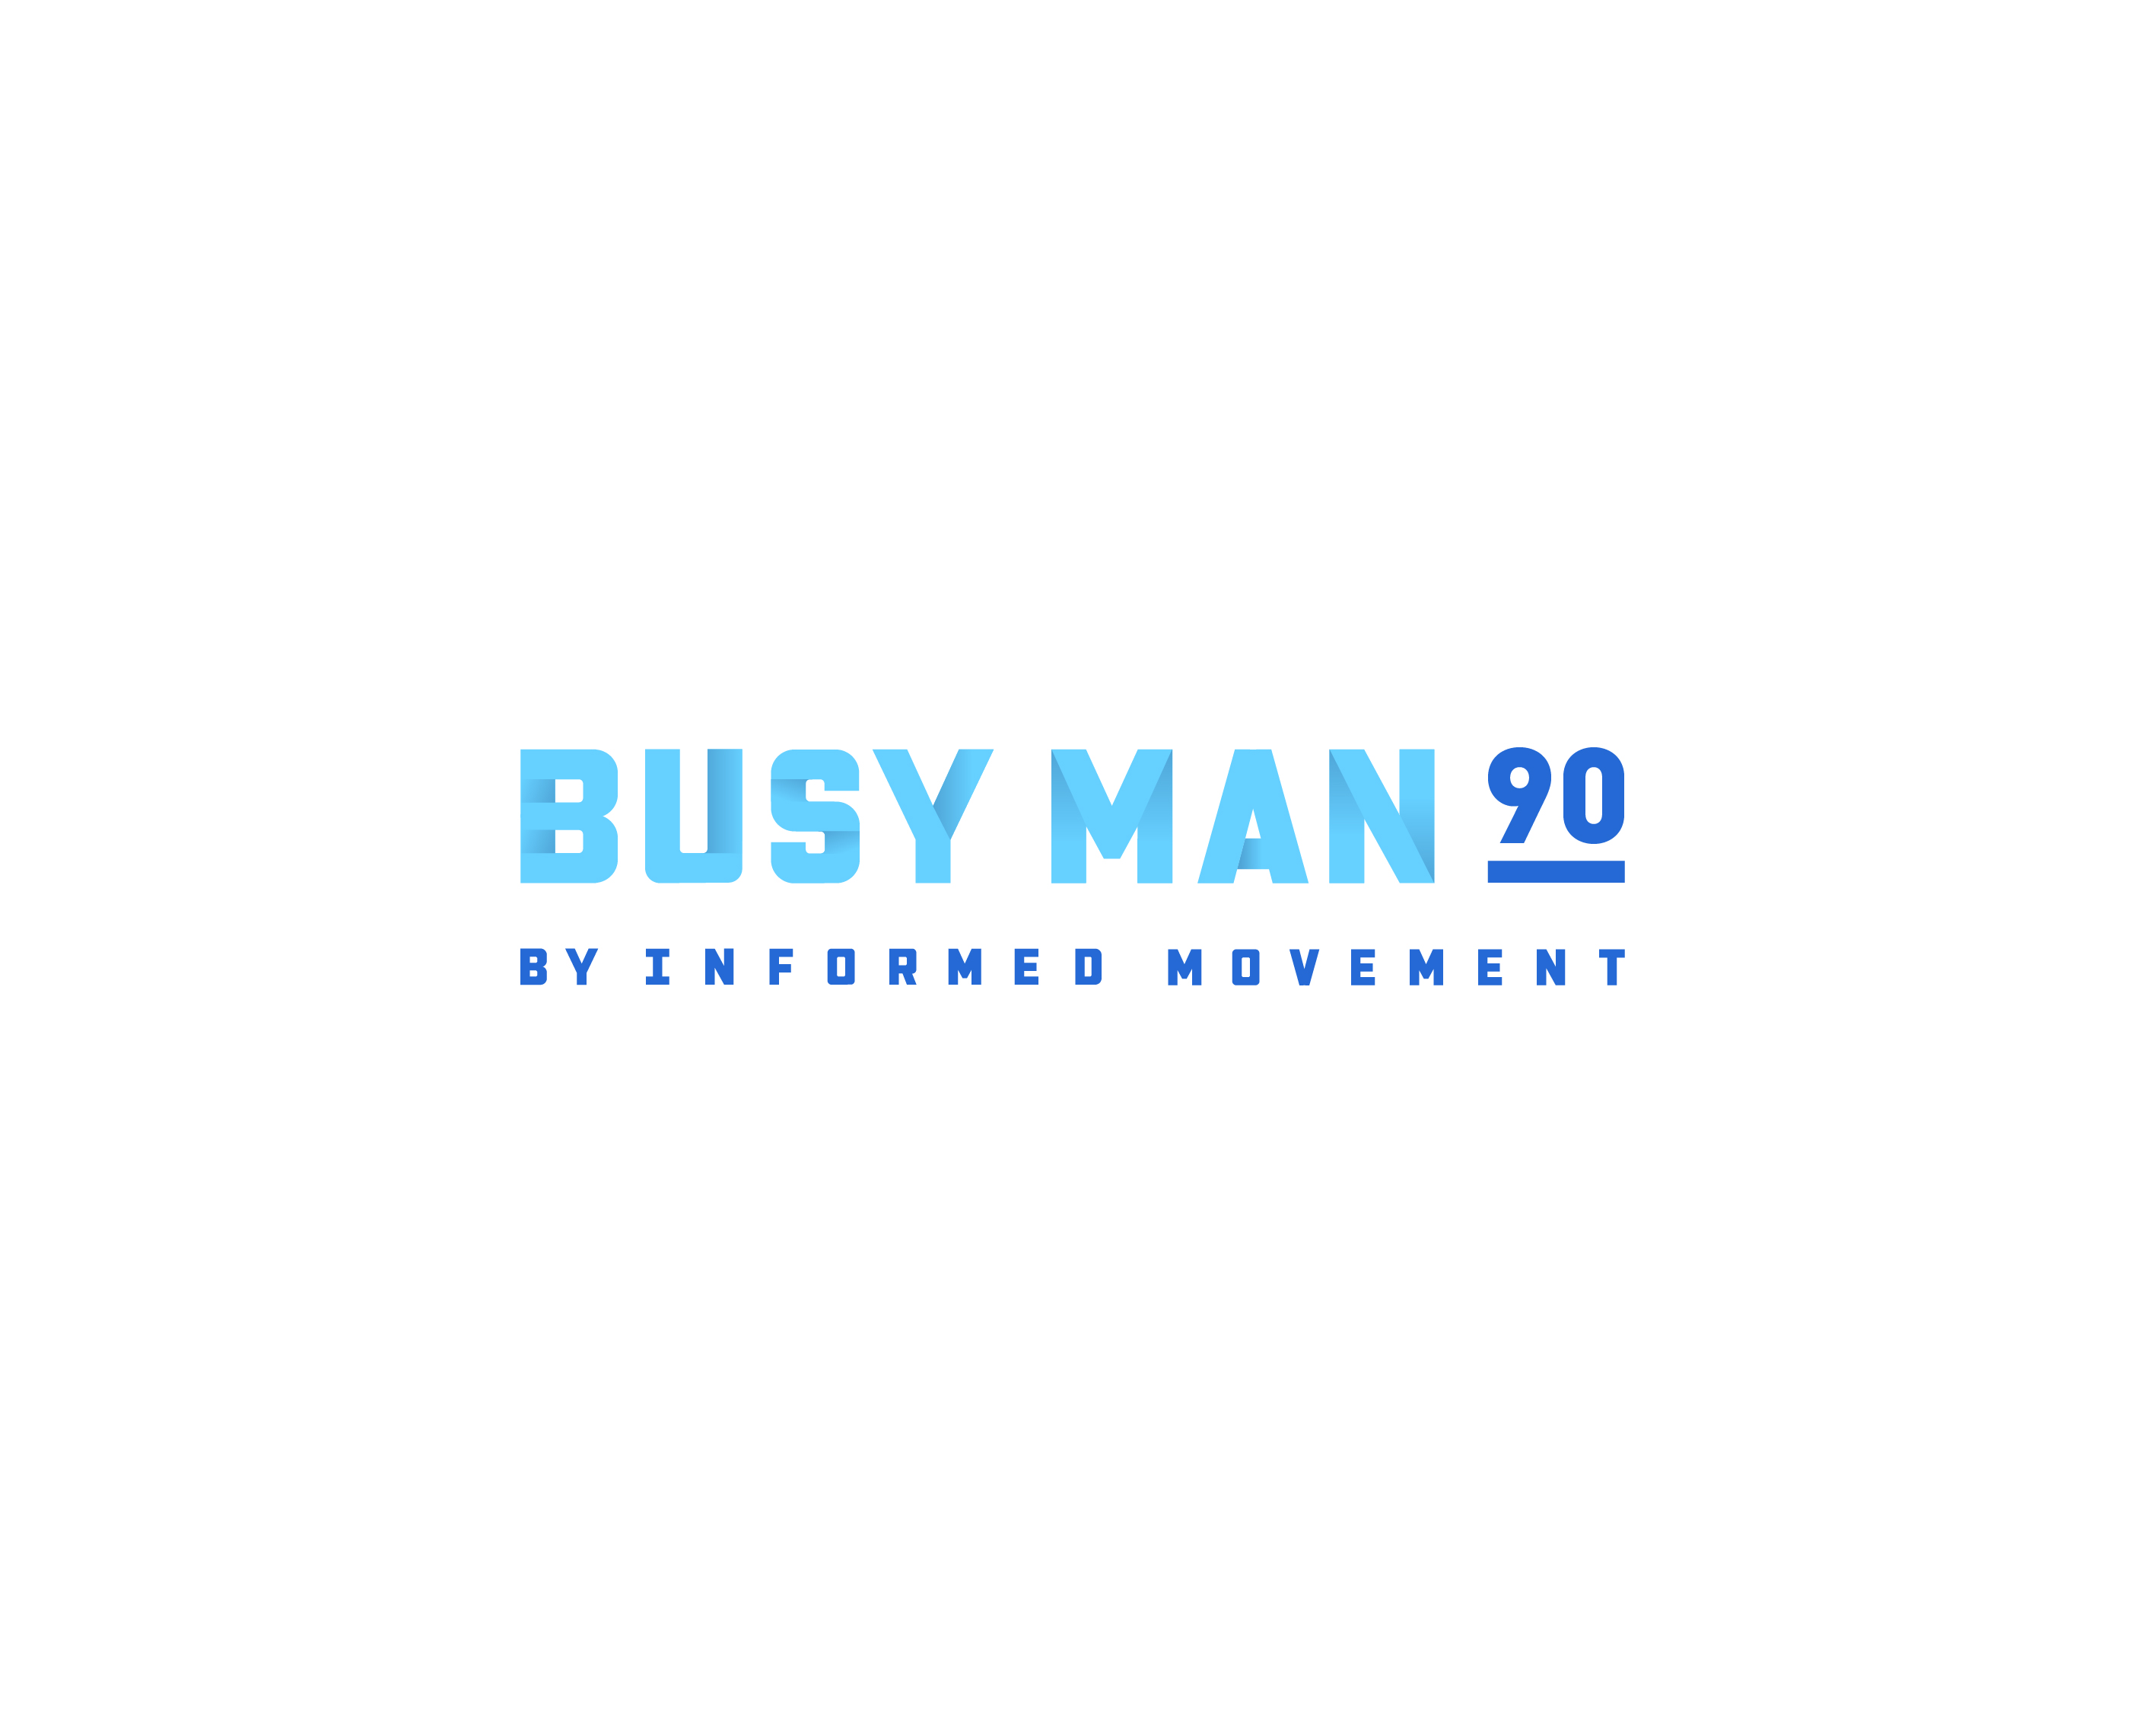 Busy man 90 main logo